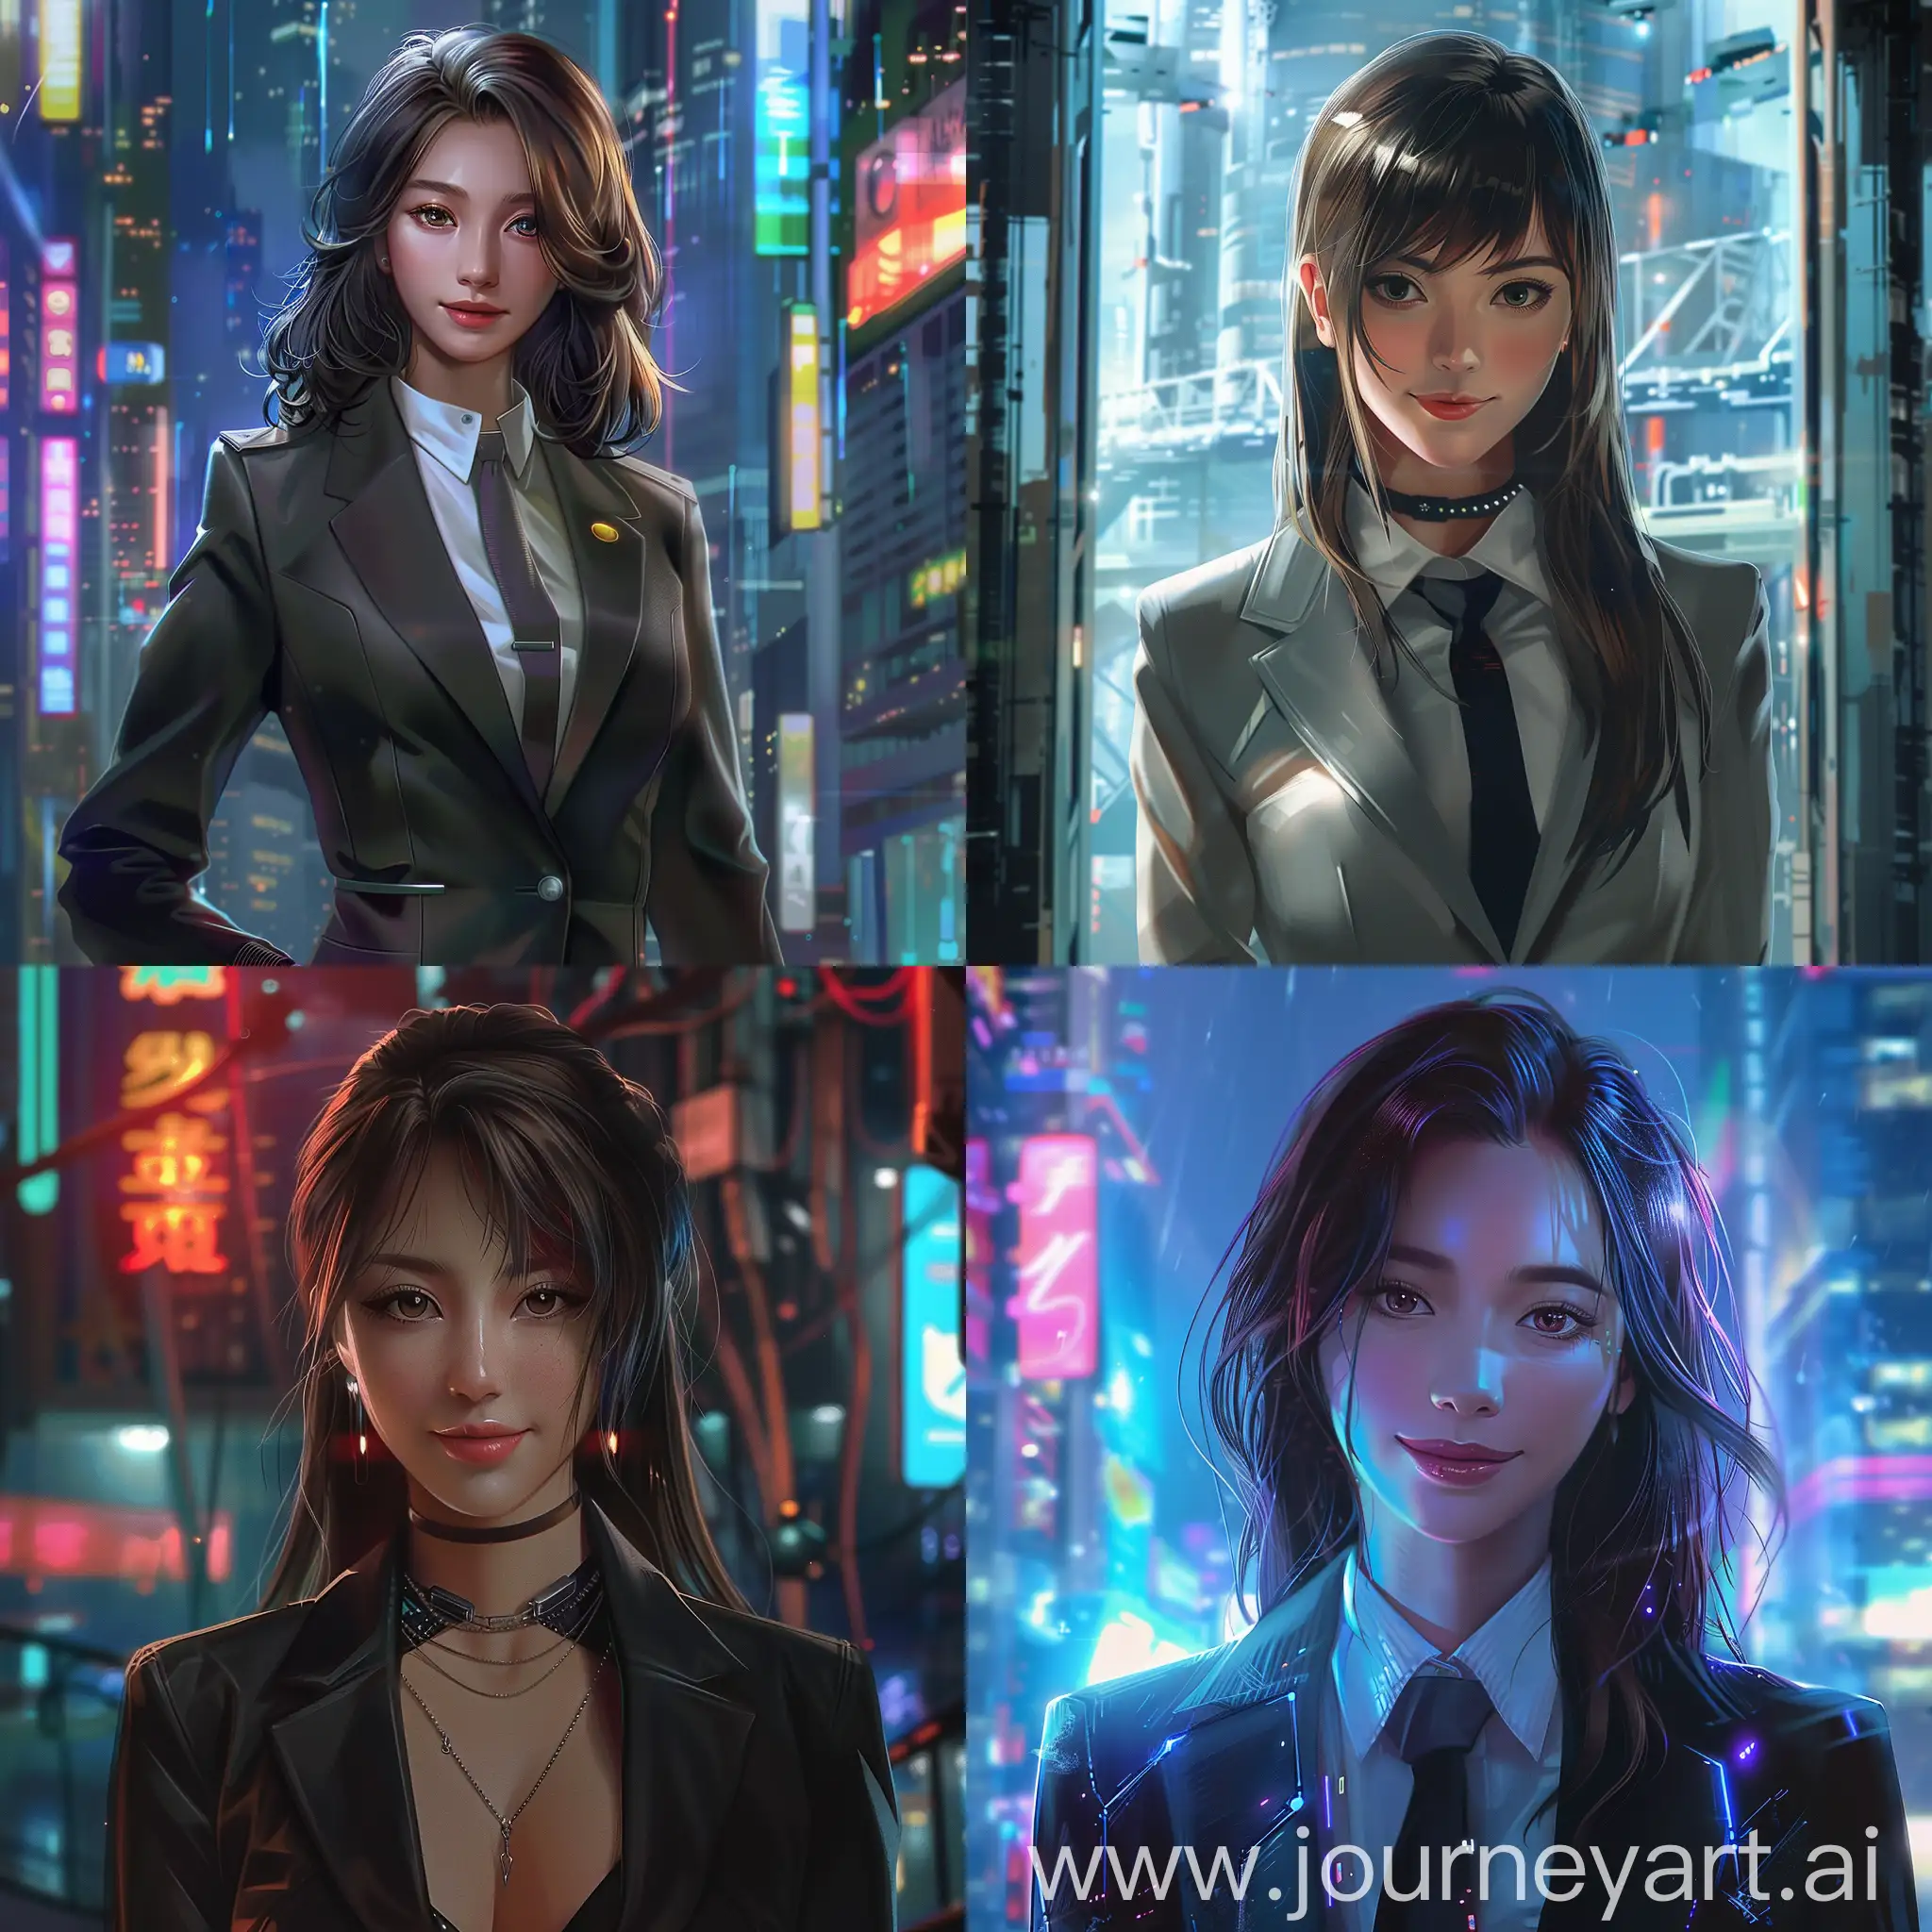 Anime, cyberpunk, future, corporate, girl, alone, asian, brown hair, smiling, gray eye, business suit, cyberpunk 2077